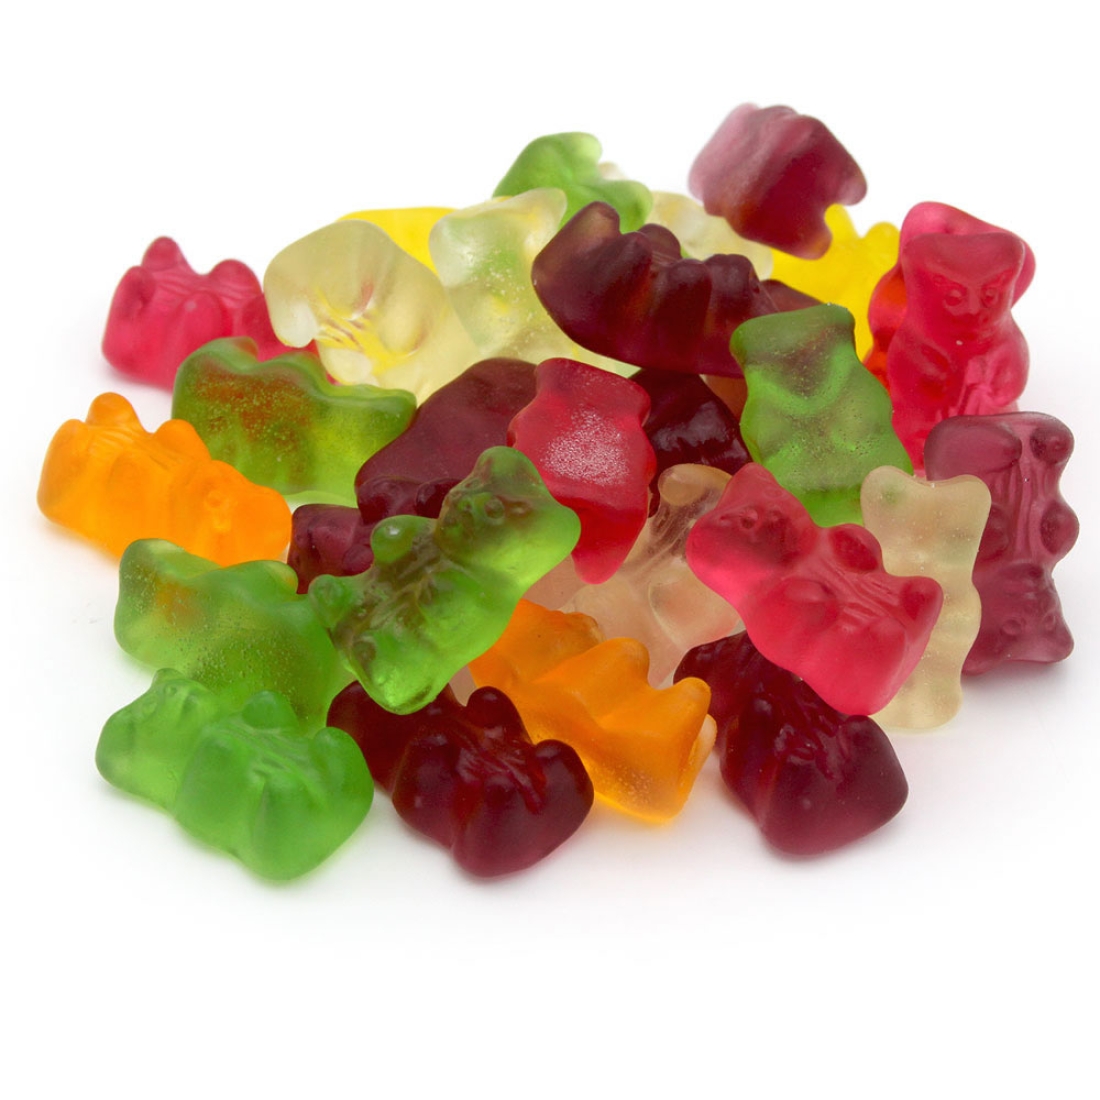 Sugar Free Gummy Bears - Diabetic Sweets